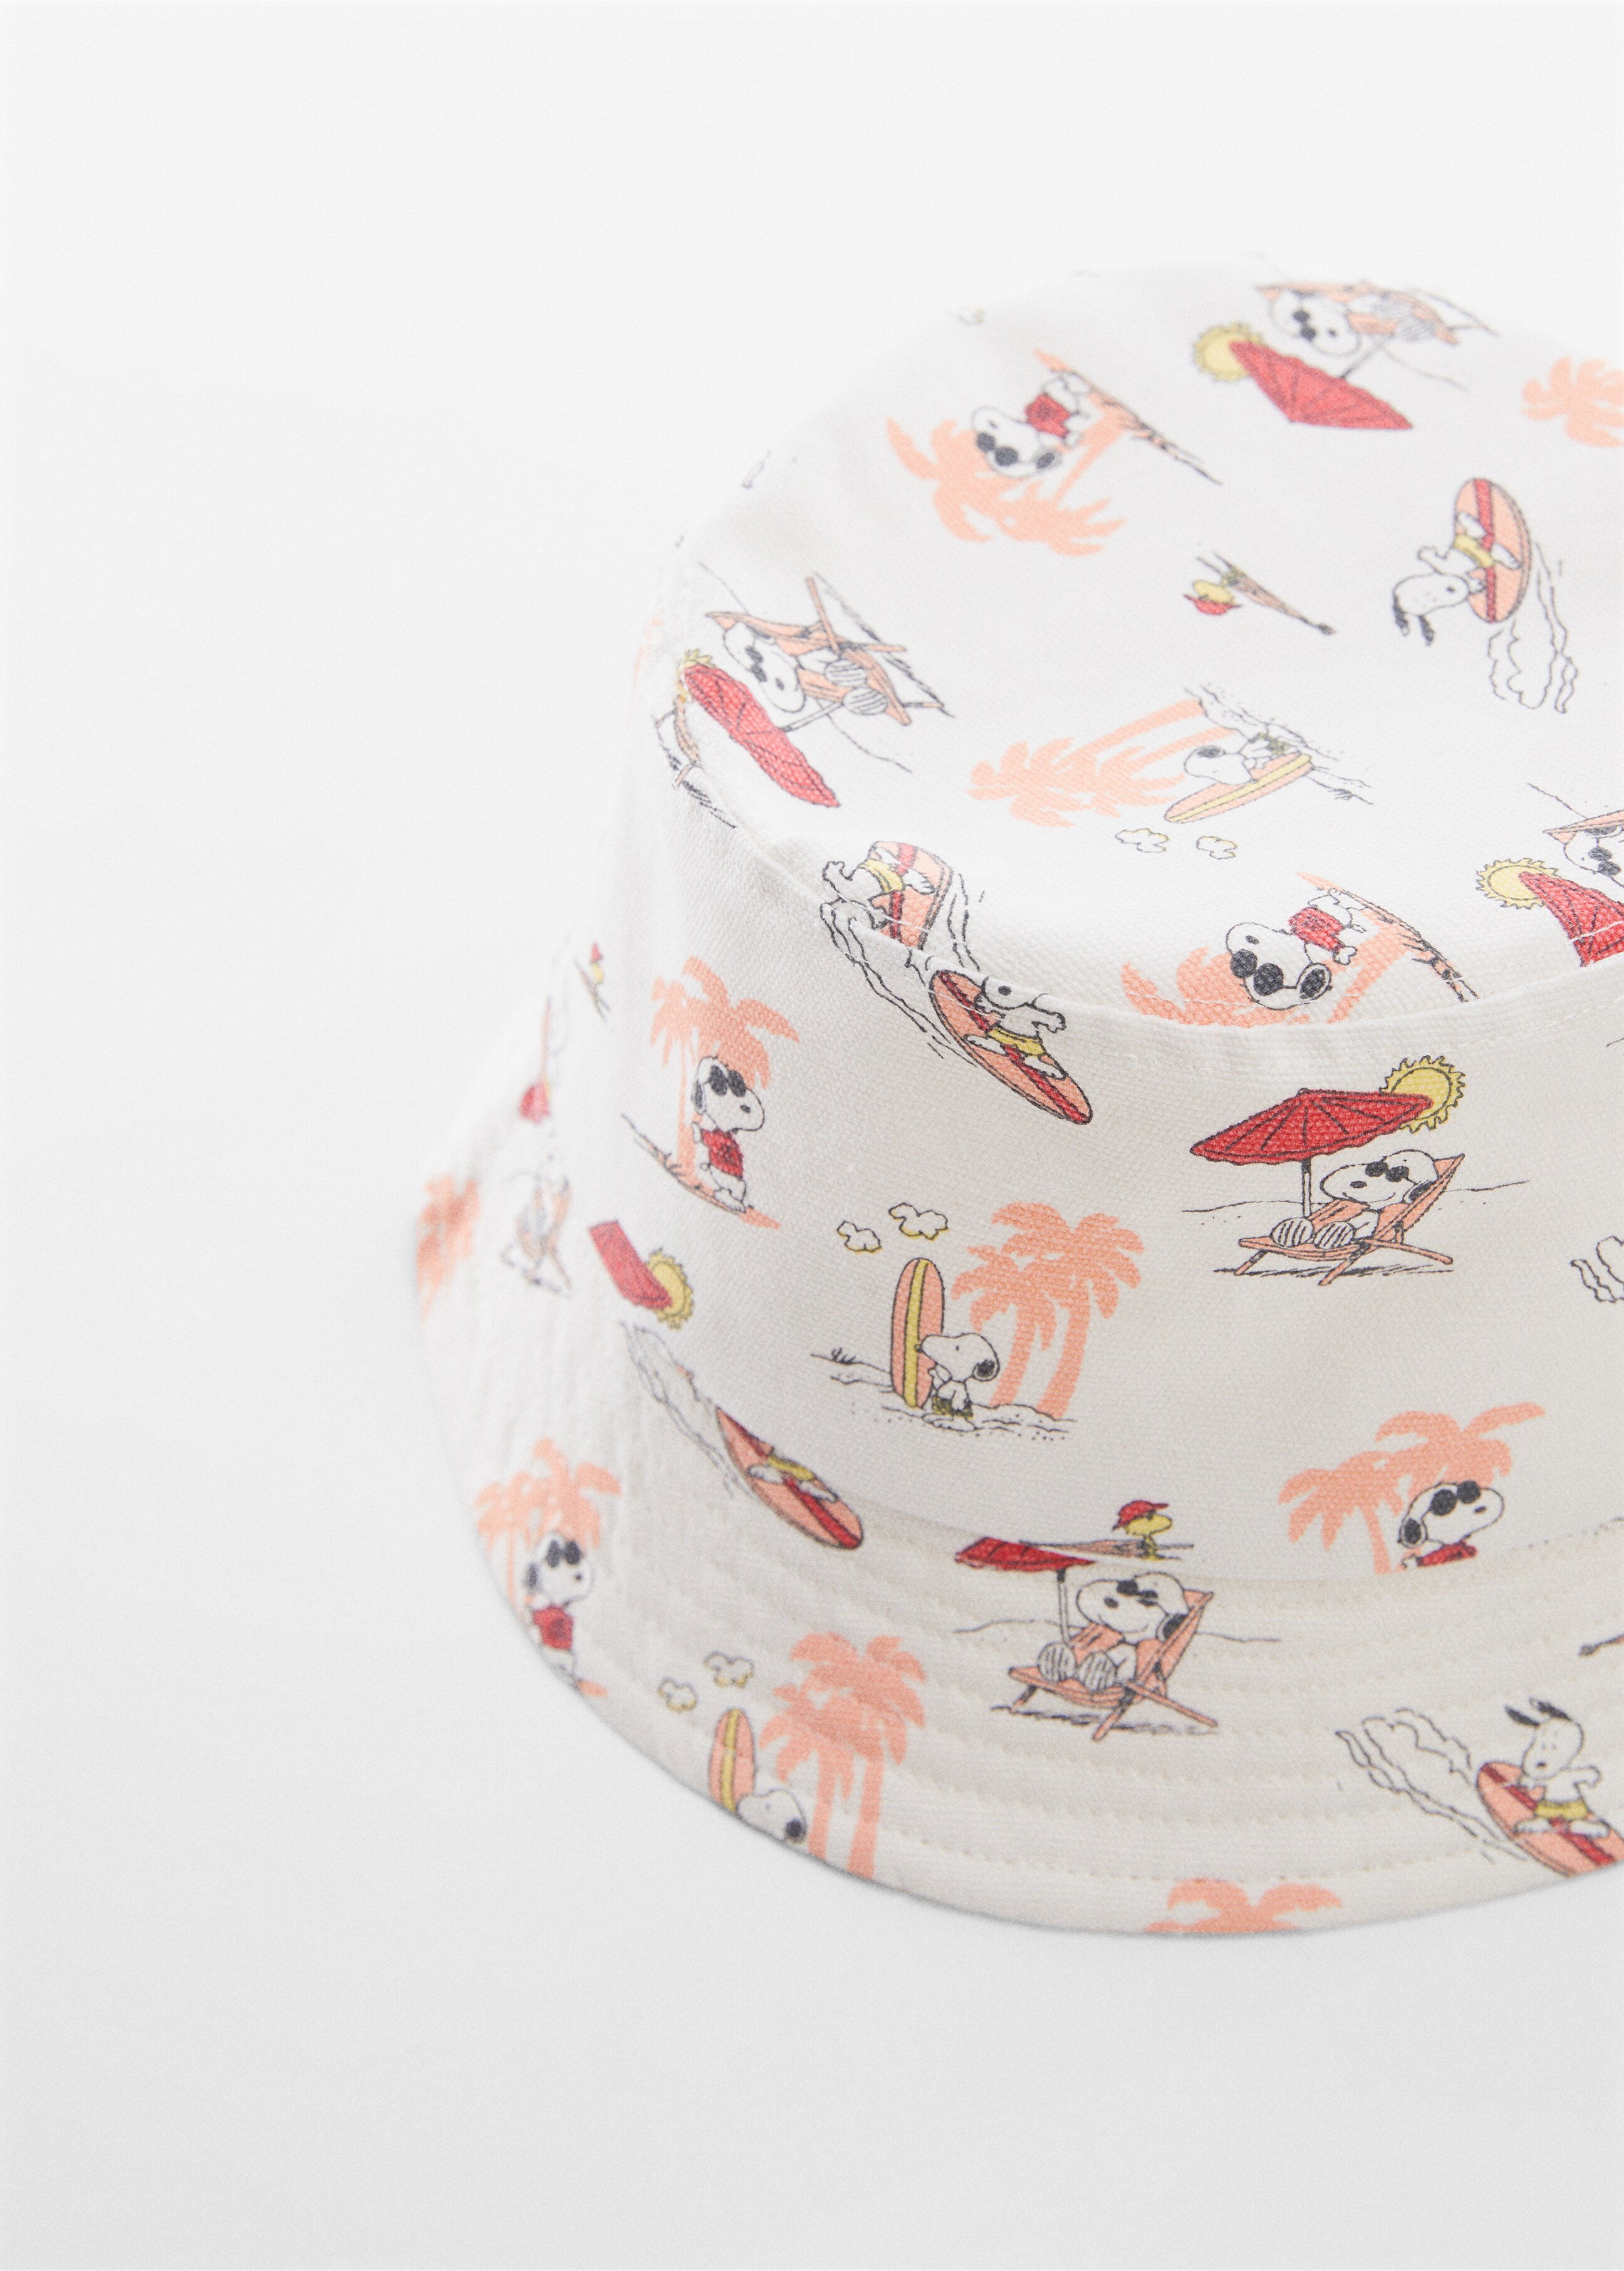 Bucket print hat - Medium plane